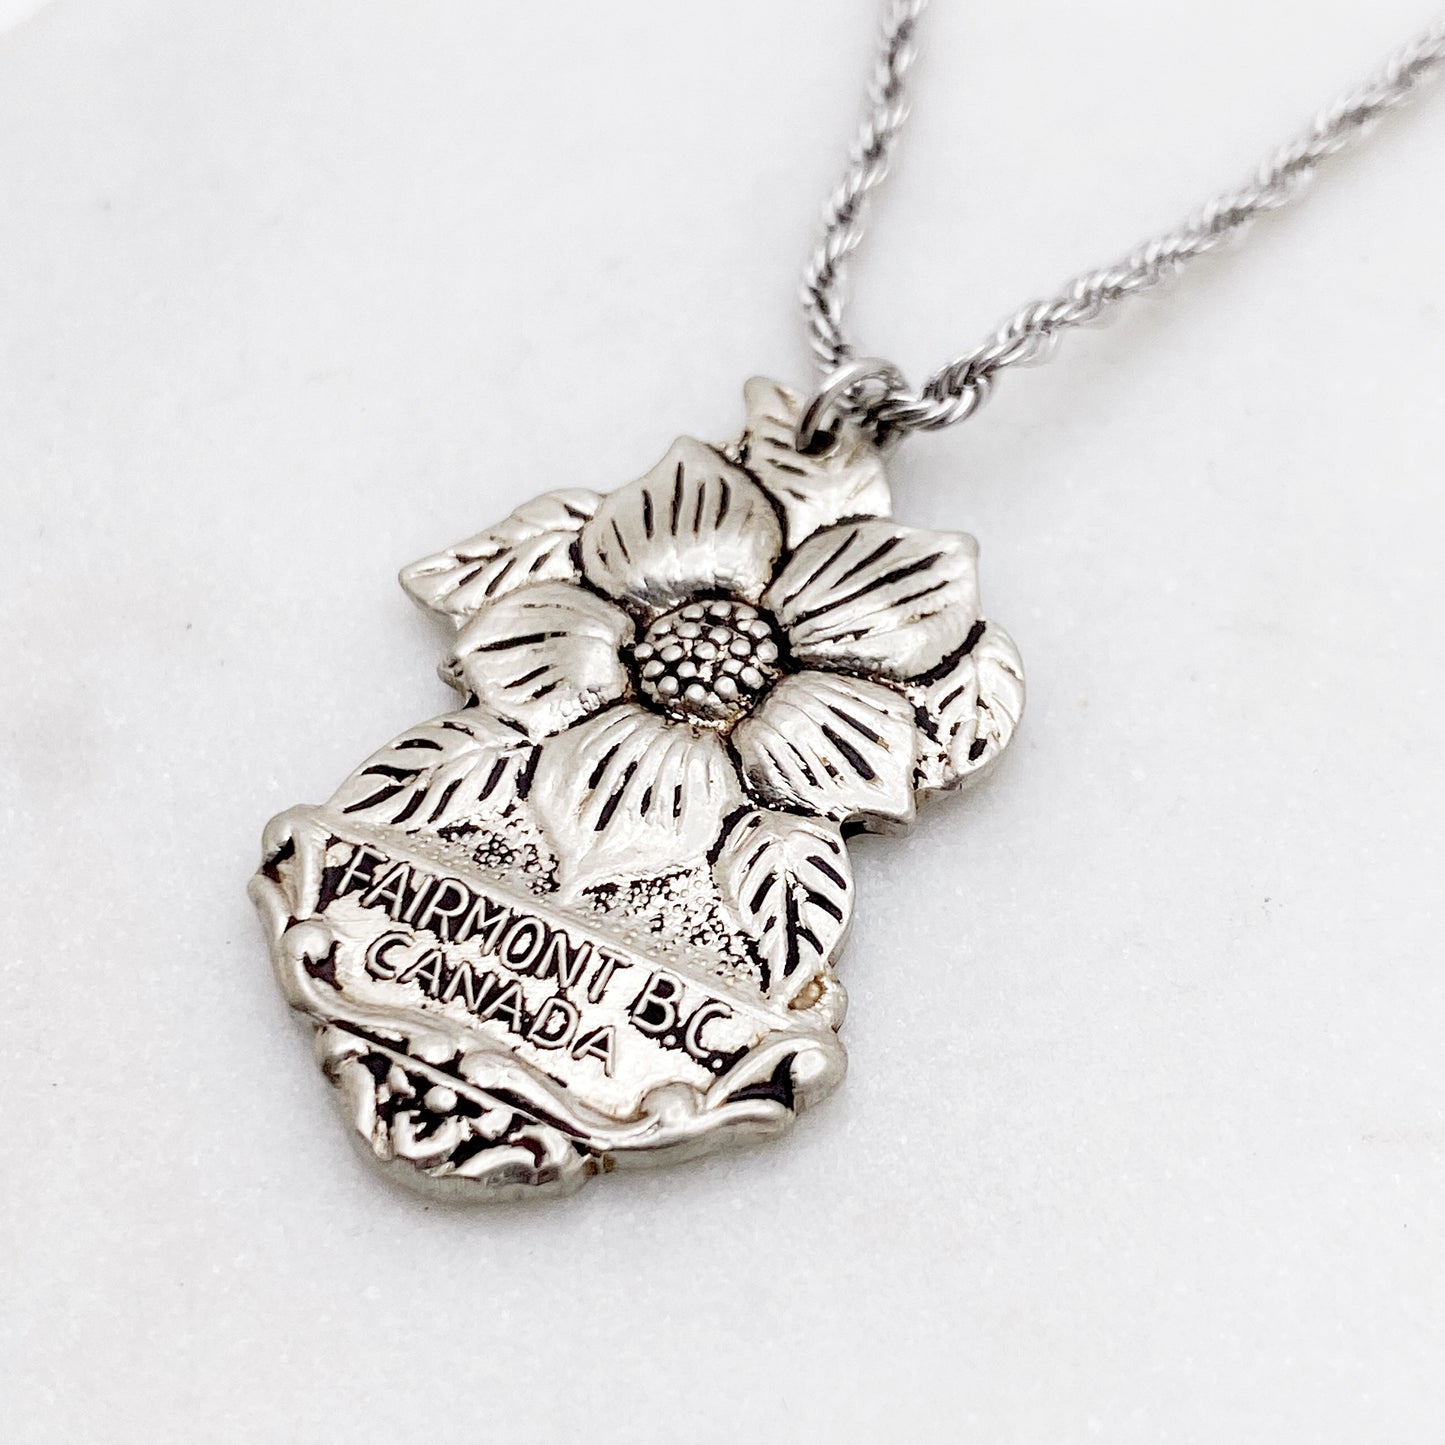 Dogwood Pendant, Fairmont British Columbia Jewelry, Reclaimed Collector's Spoon Necklace, Vintage Souvenir Spoon Jewelry Necklaces callistafaye   